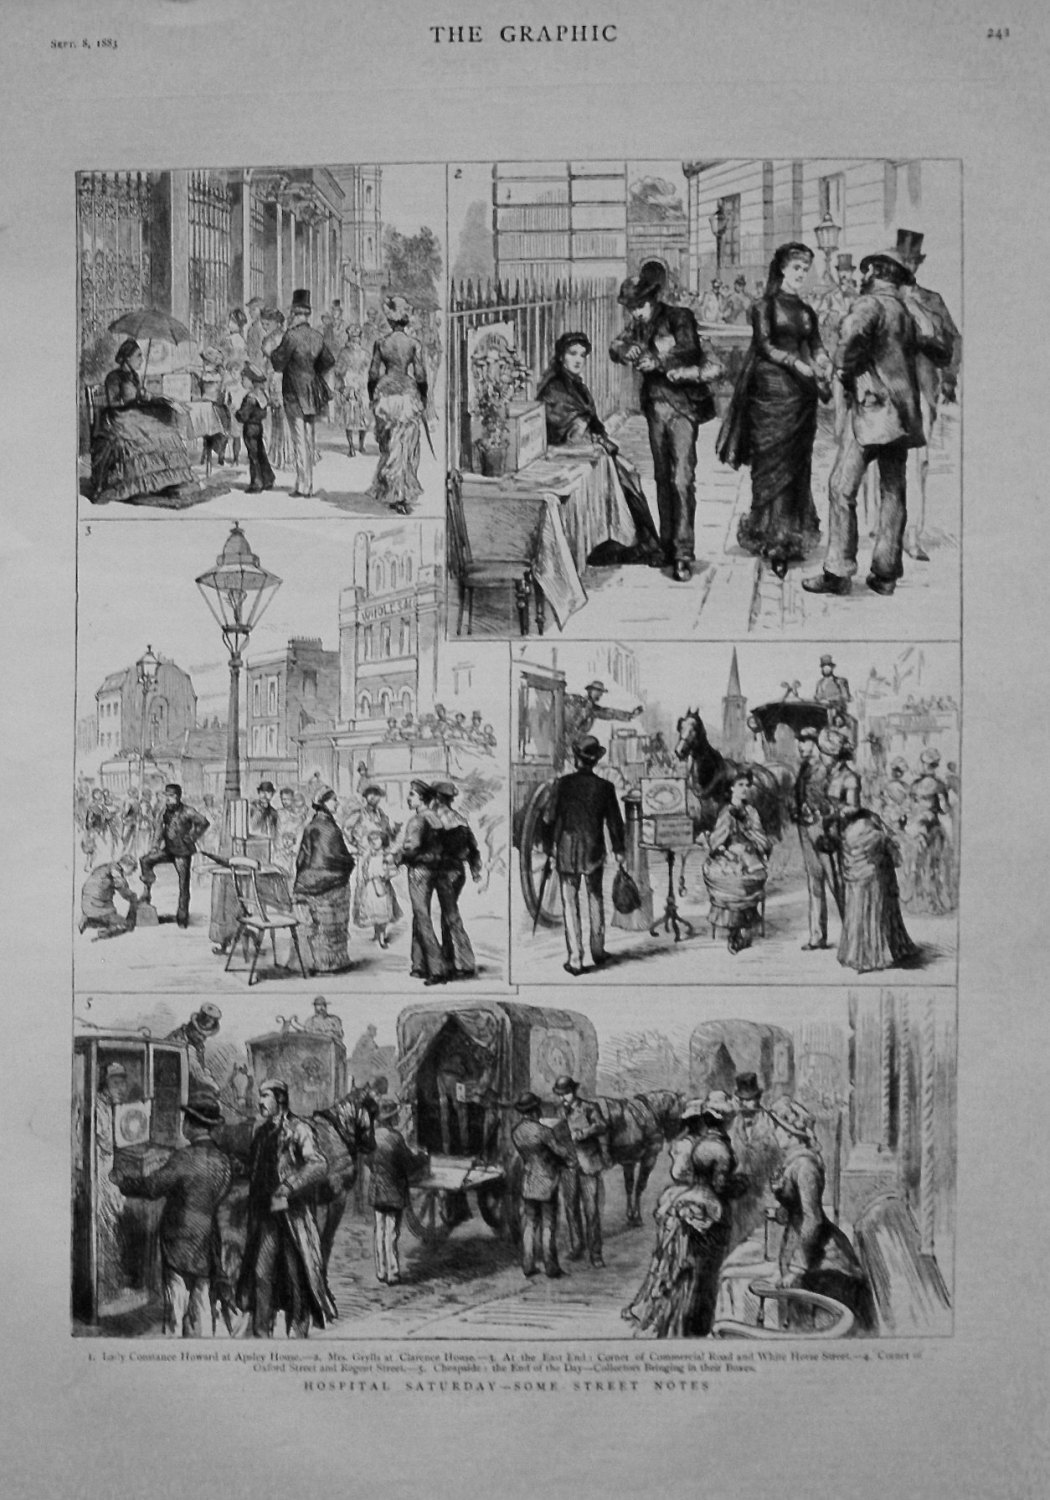 Hospital Saturday - Some Street Notes. 1883